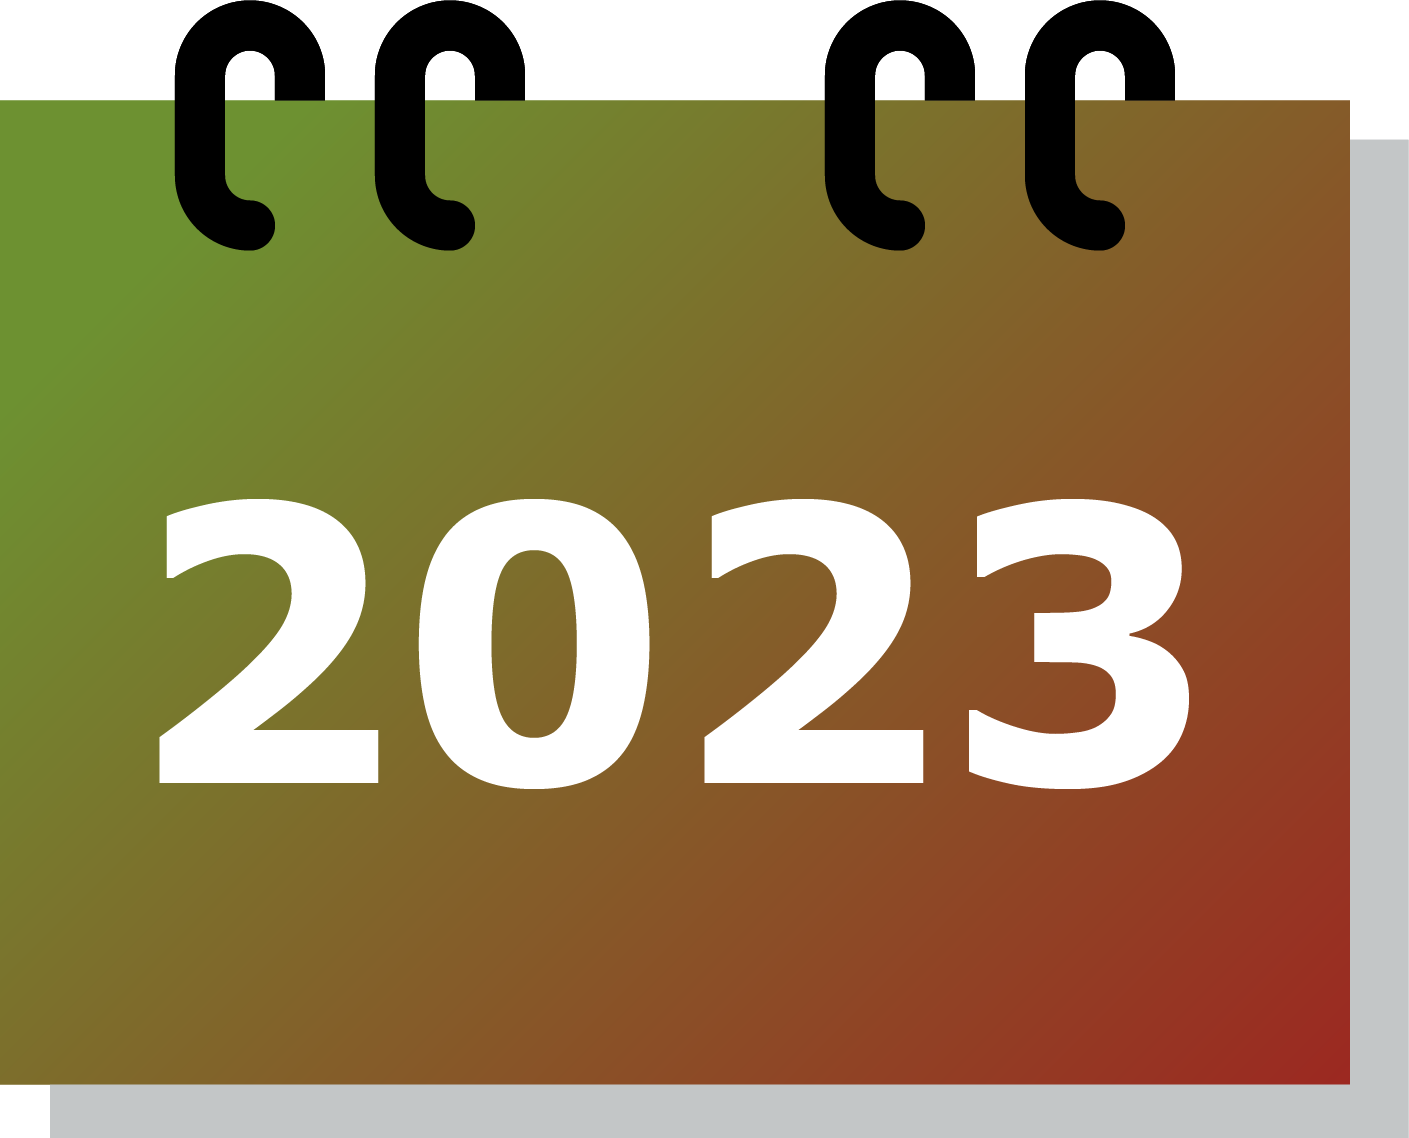 kalender 2021